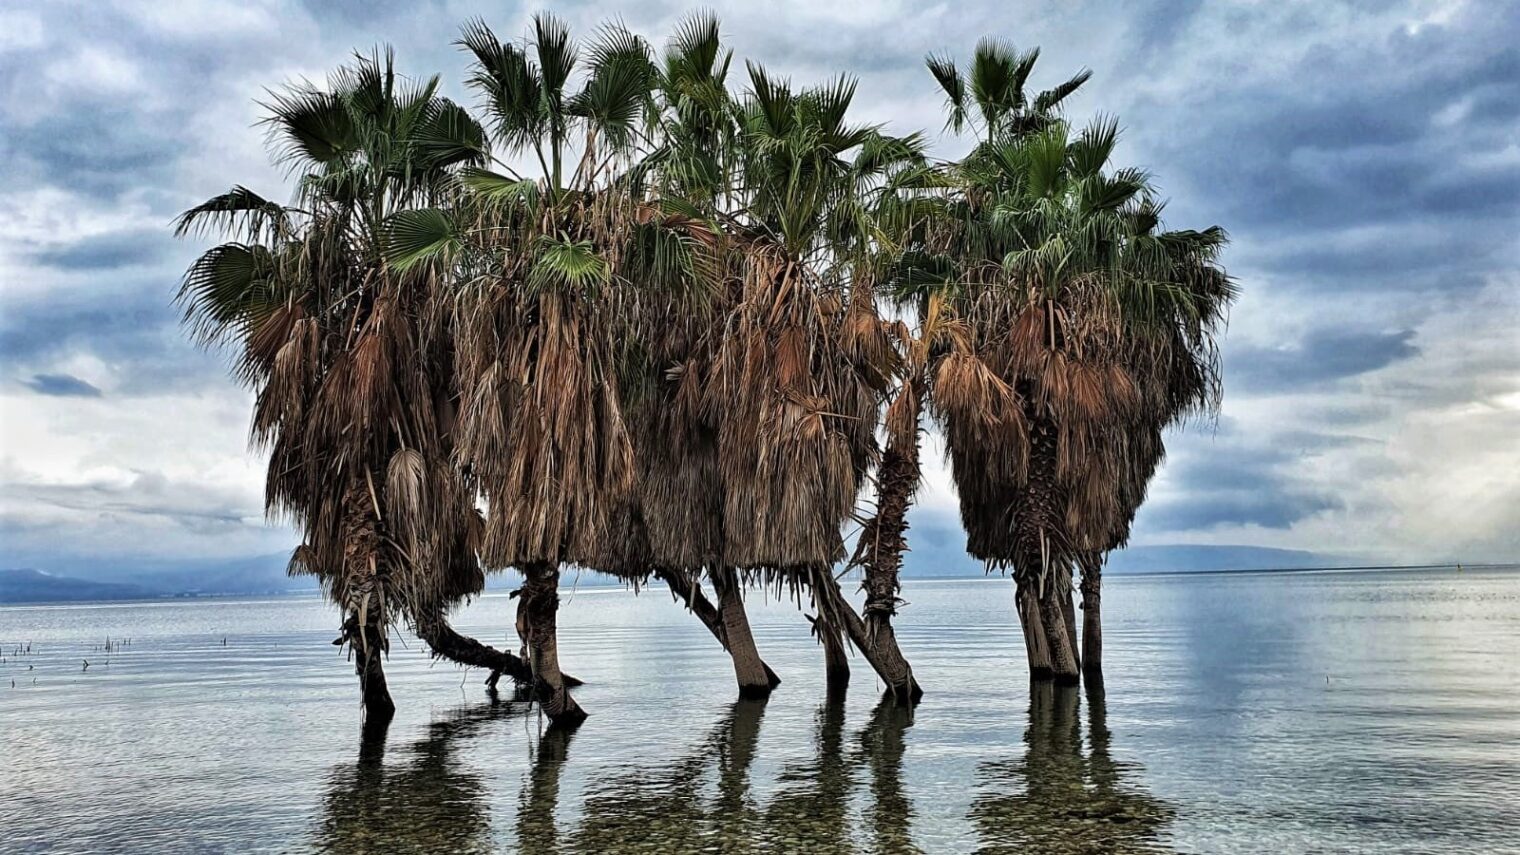 Trees “walk in the water” in the Sea of Galilee (Lake Kinneret). Photo by Talya Shapiro via Nature Israel